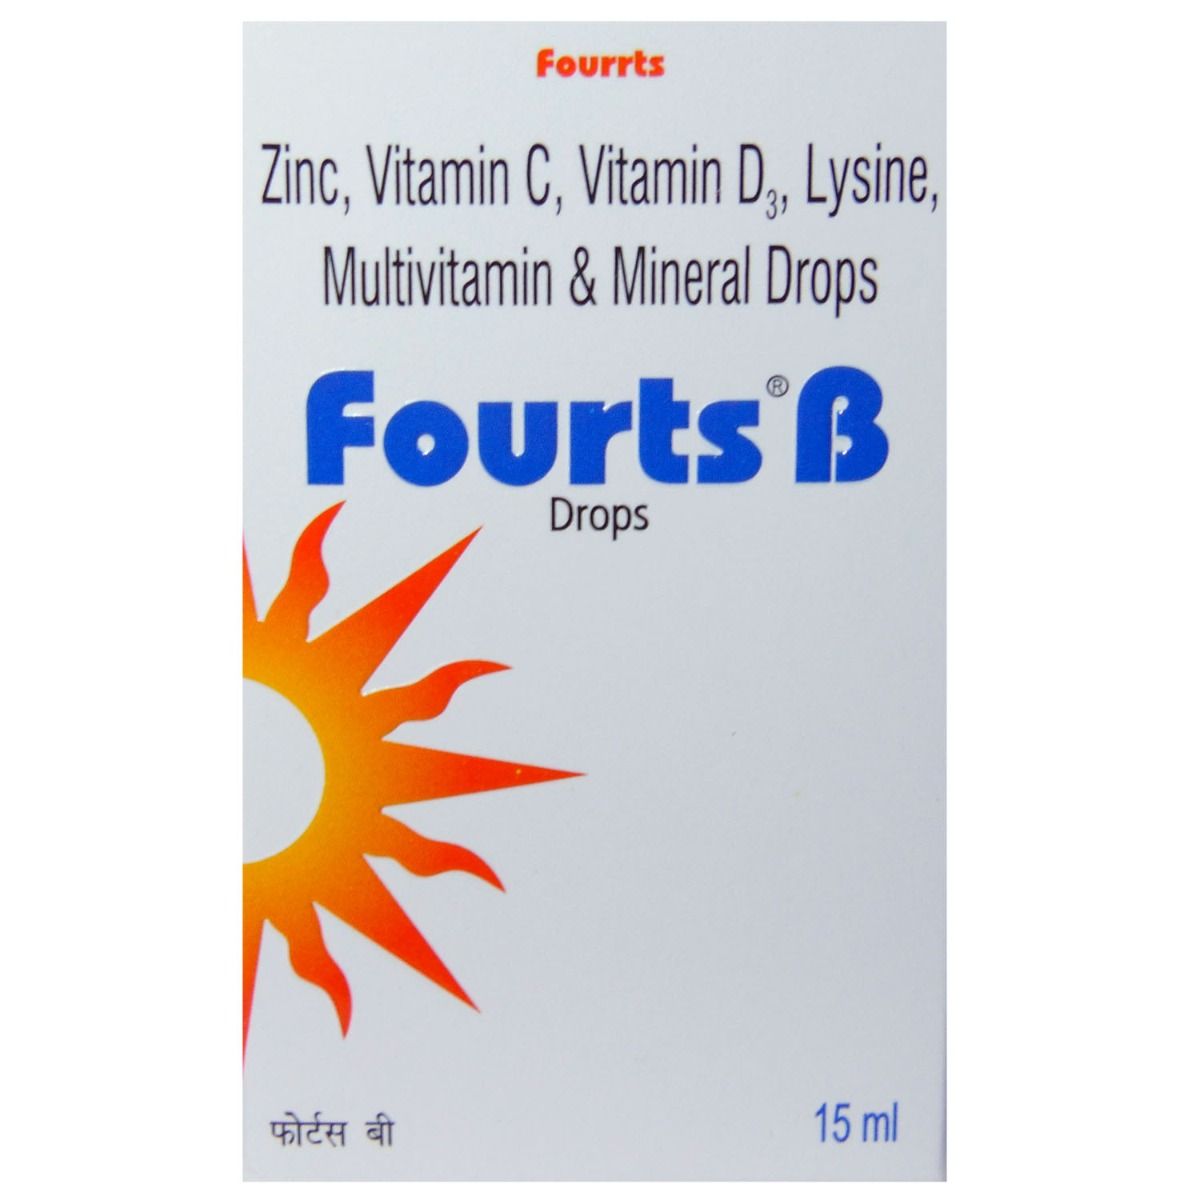 Fourts B Drops 15 ml, Pack of 1 